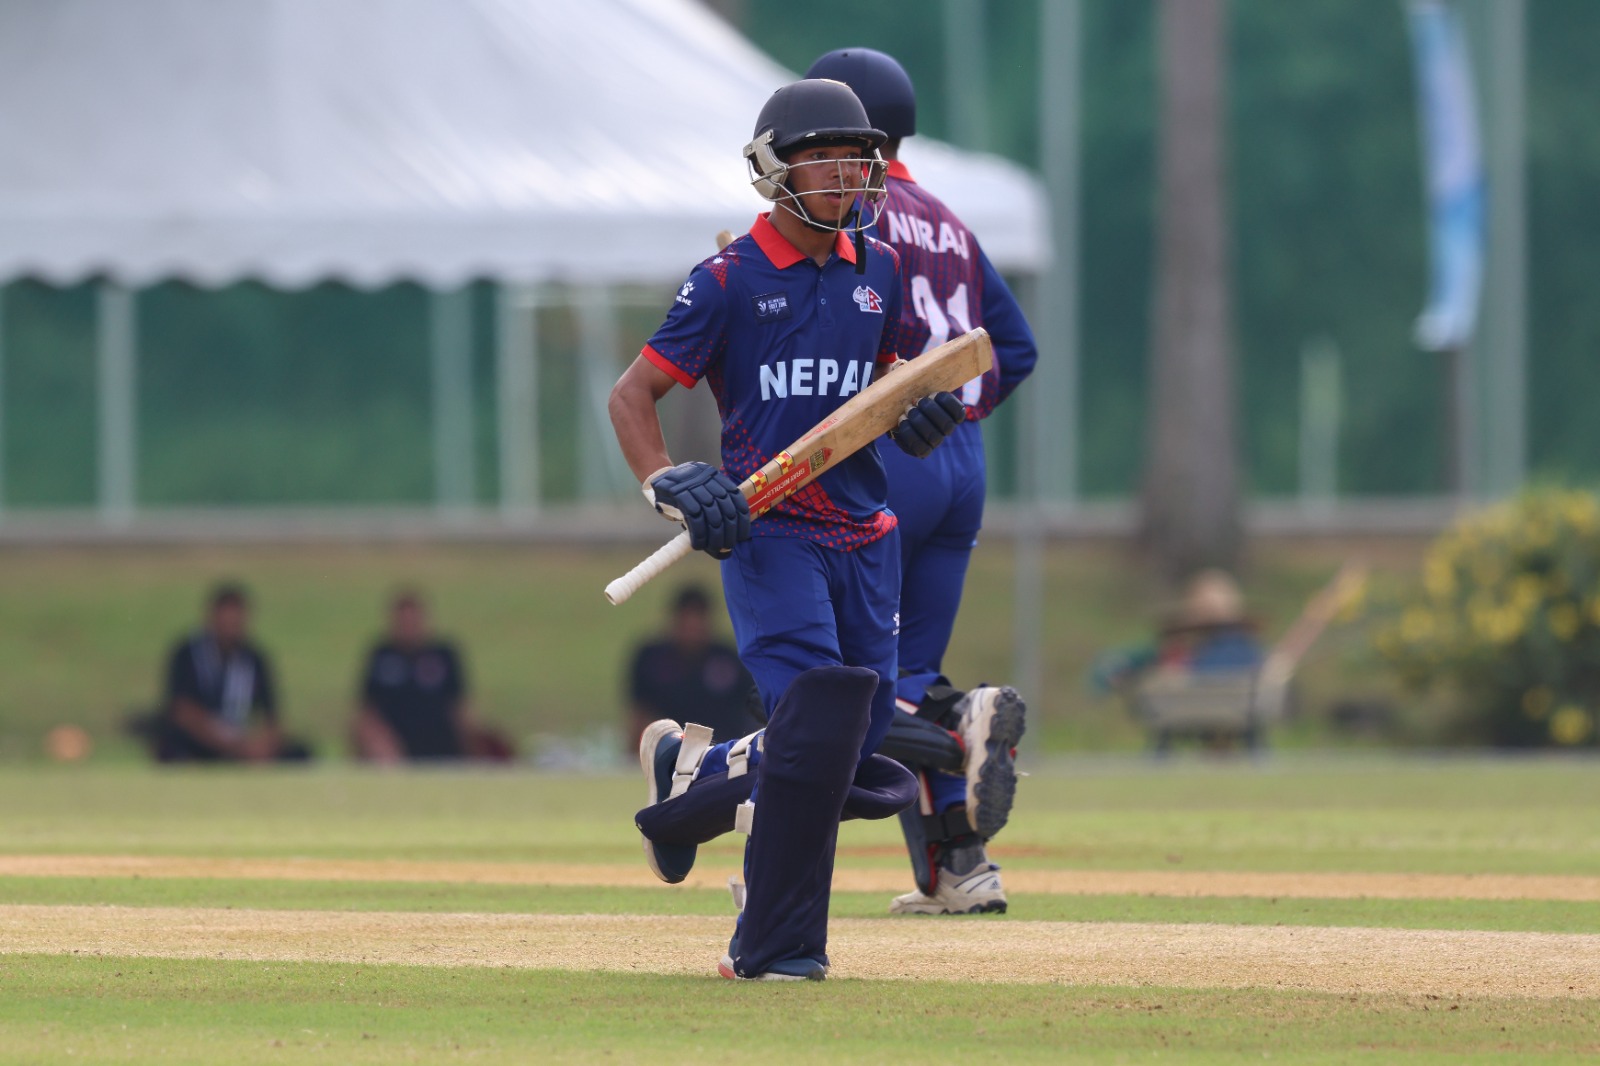 Nepal set a strong 185-run target to Singapore